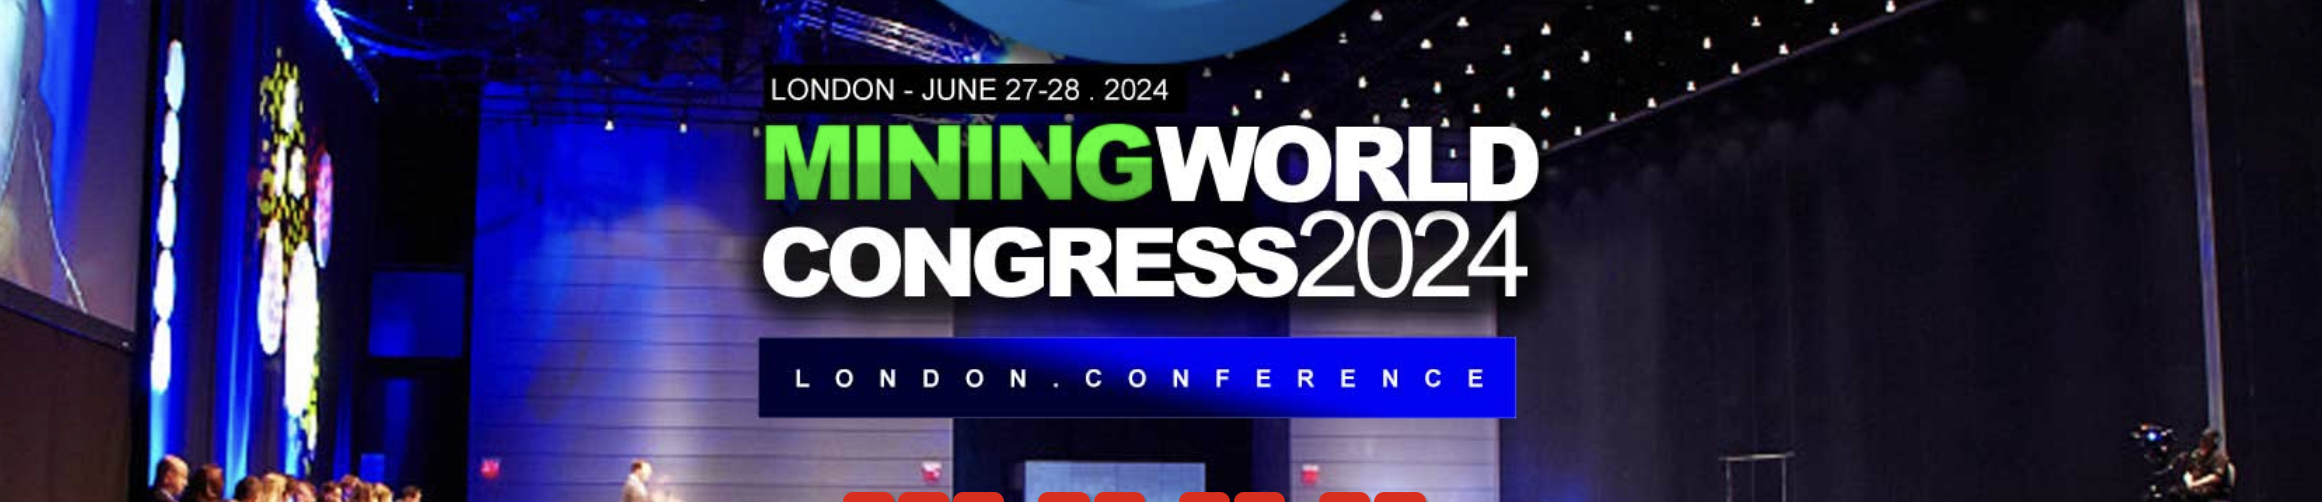 Mining World Congress 2024